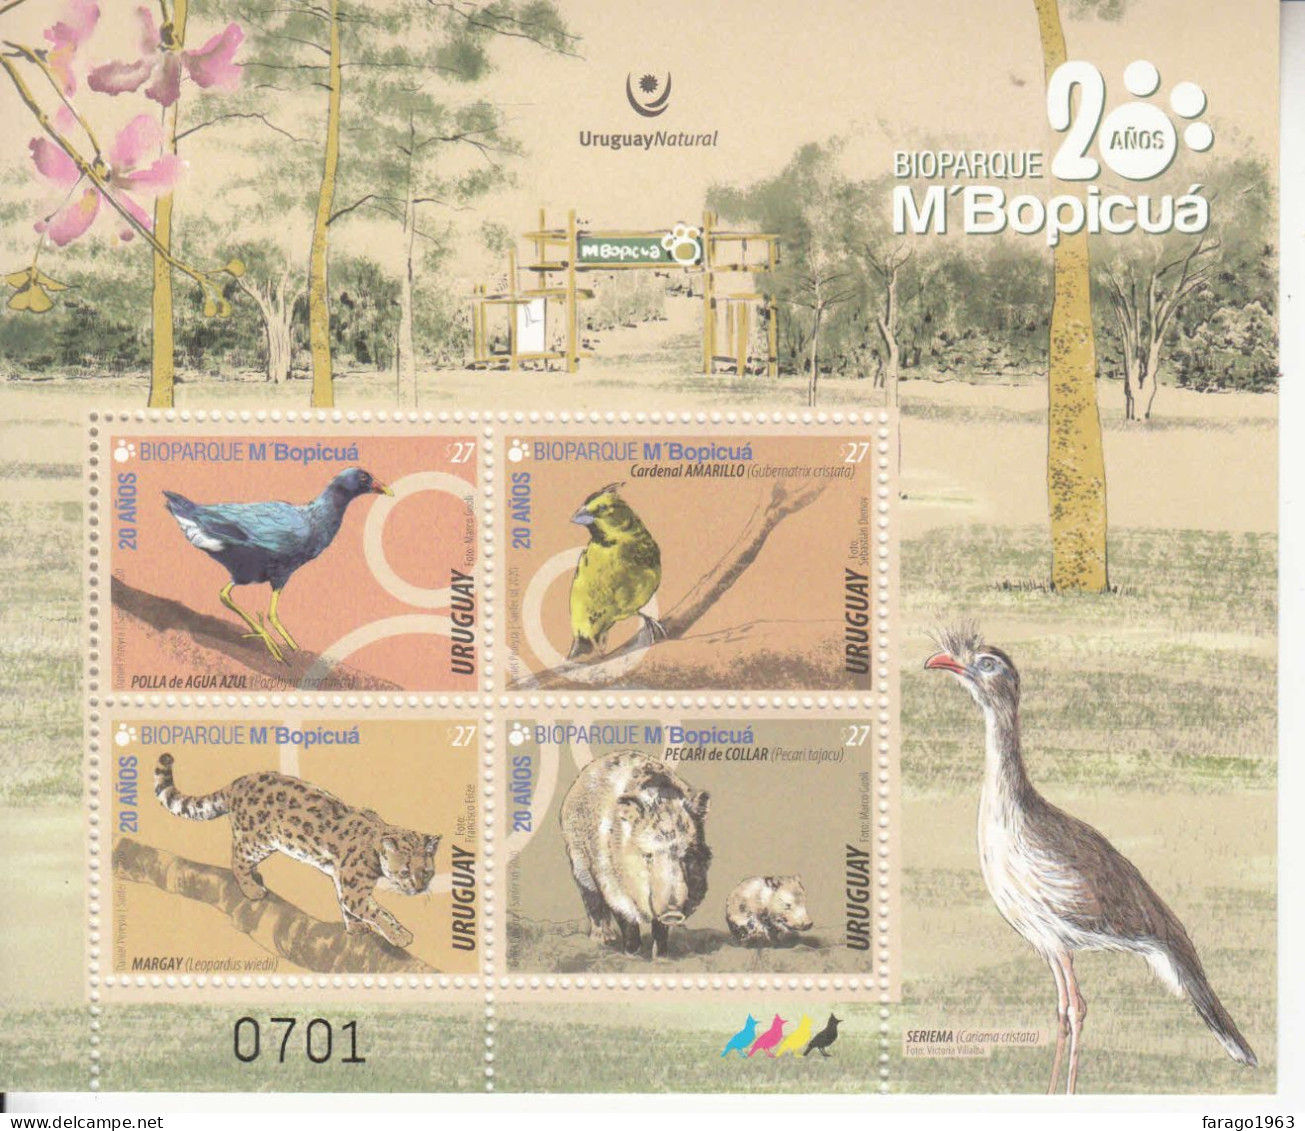 2020 Uruguay M'Bopicua Bio Park Birds Cats  Souvenir Sheet MNH - Uruguay